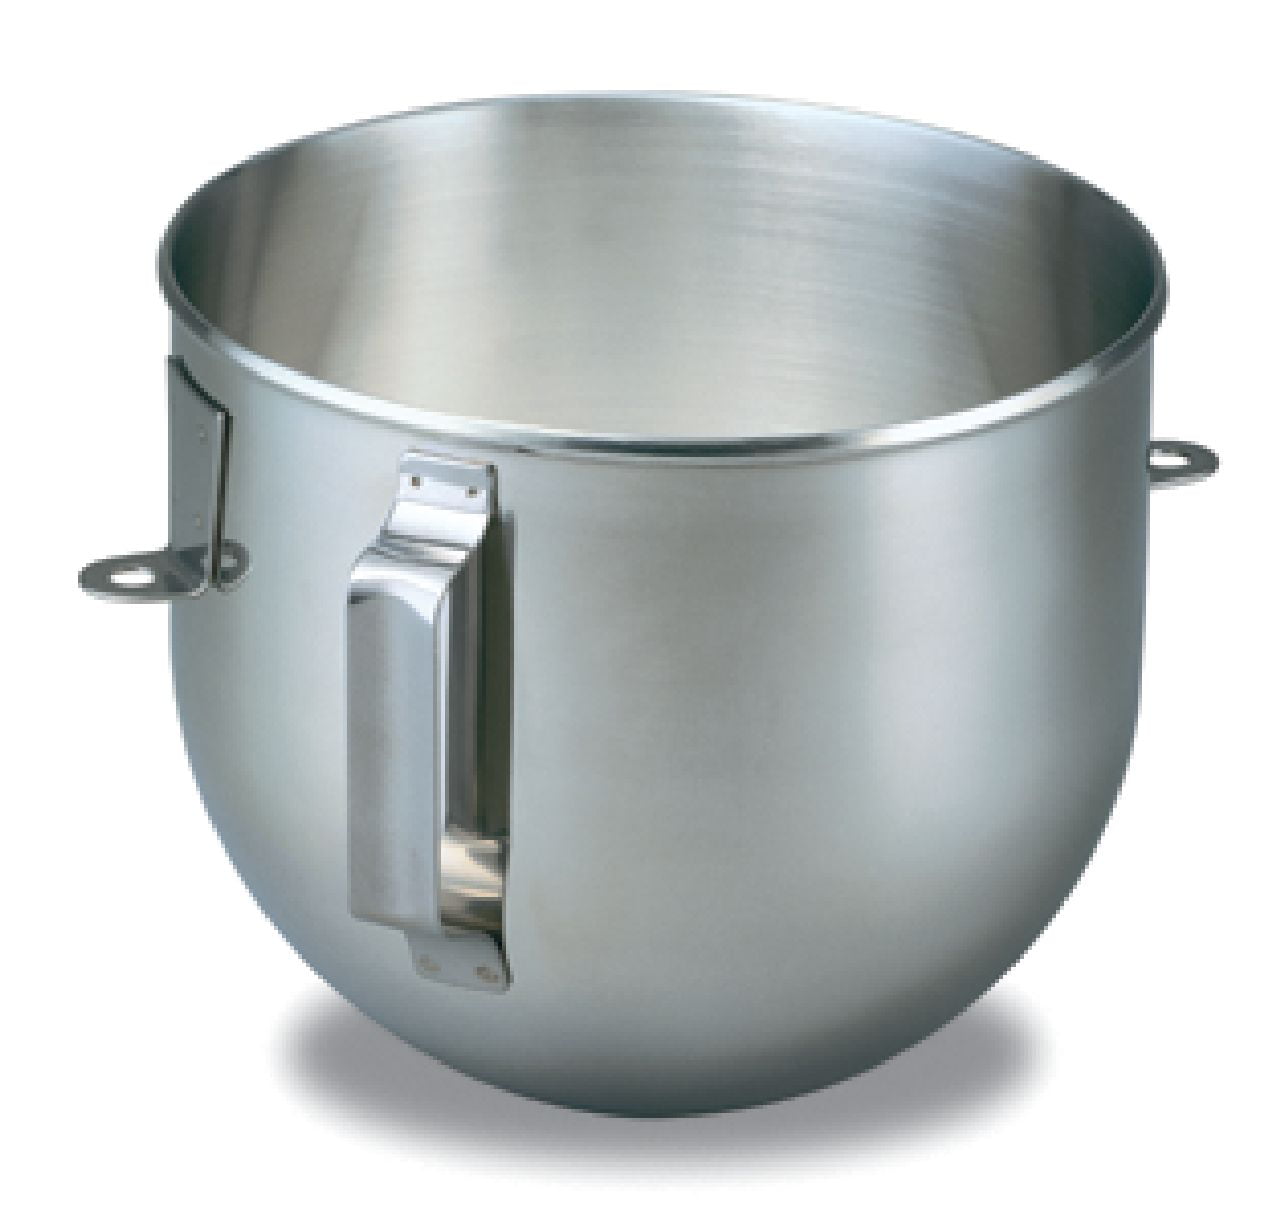 KitchenAid K5ASB Brushed Stainless Steel 5 Quart Mixing Bowl with Stainless Steel Mixing Bowl With Handle